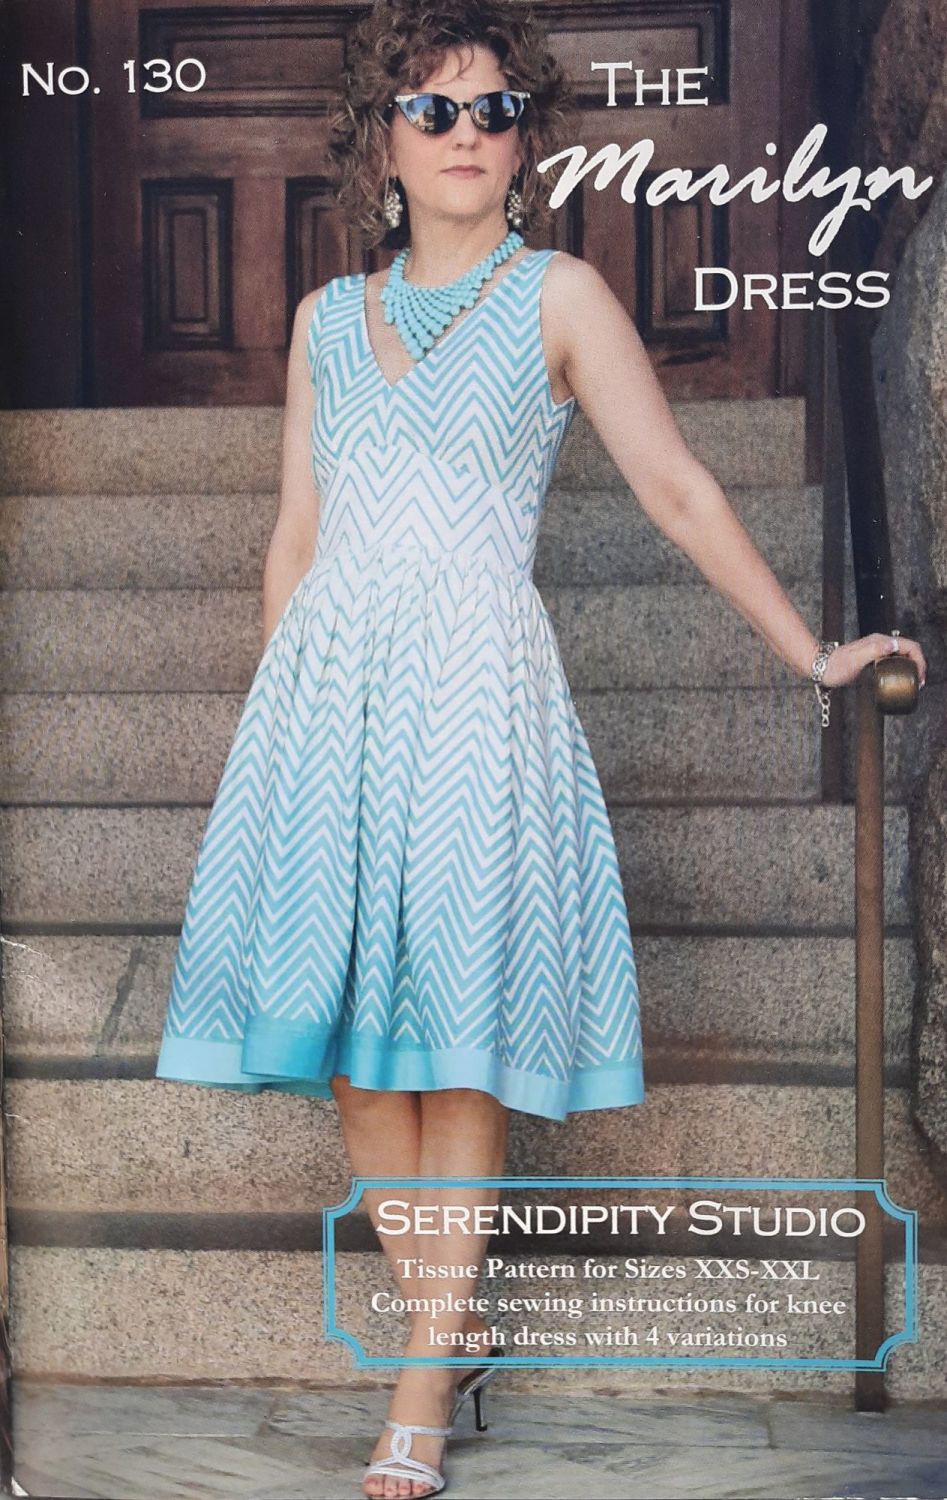 The Marilyn Dress Pattern by Serendipity Studio